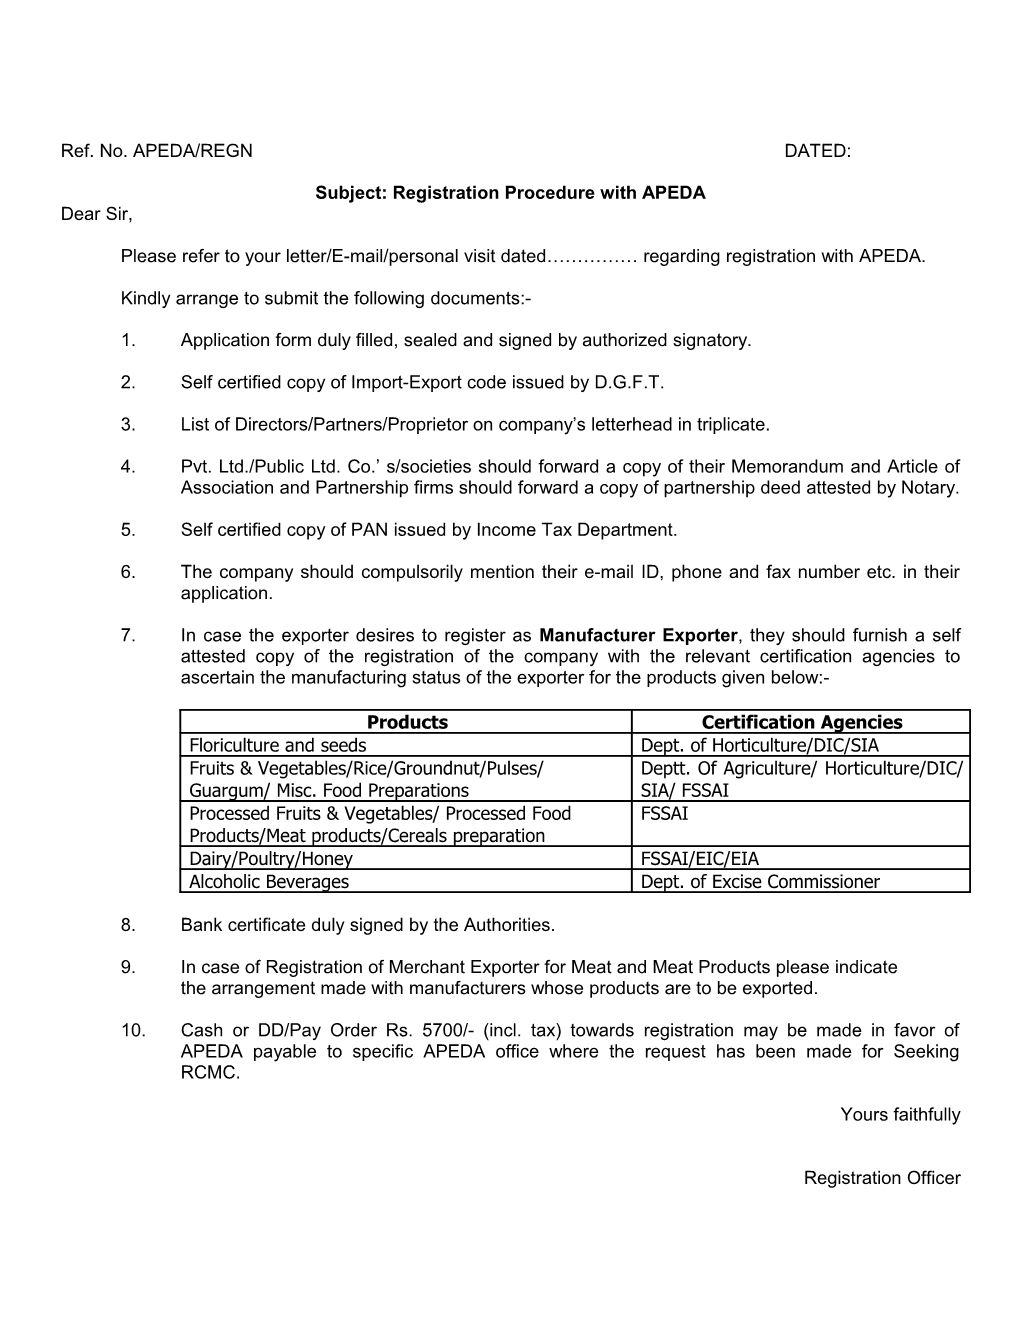 Subject: Registration Procedure with APEDA s1